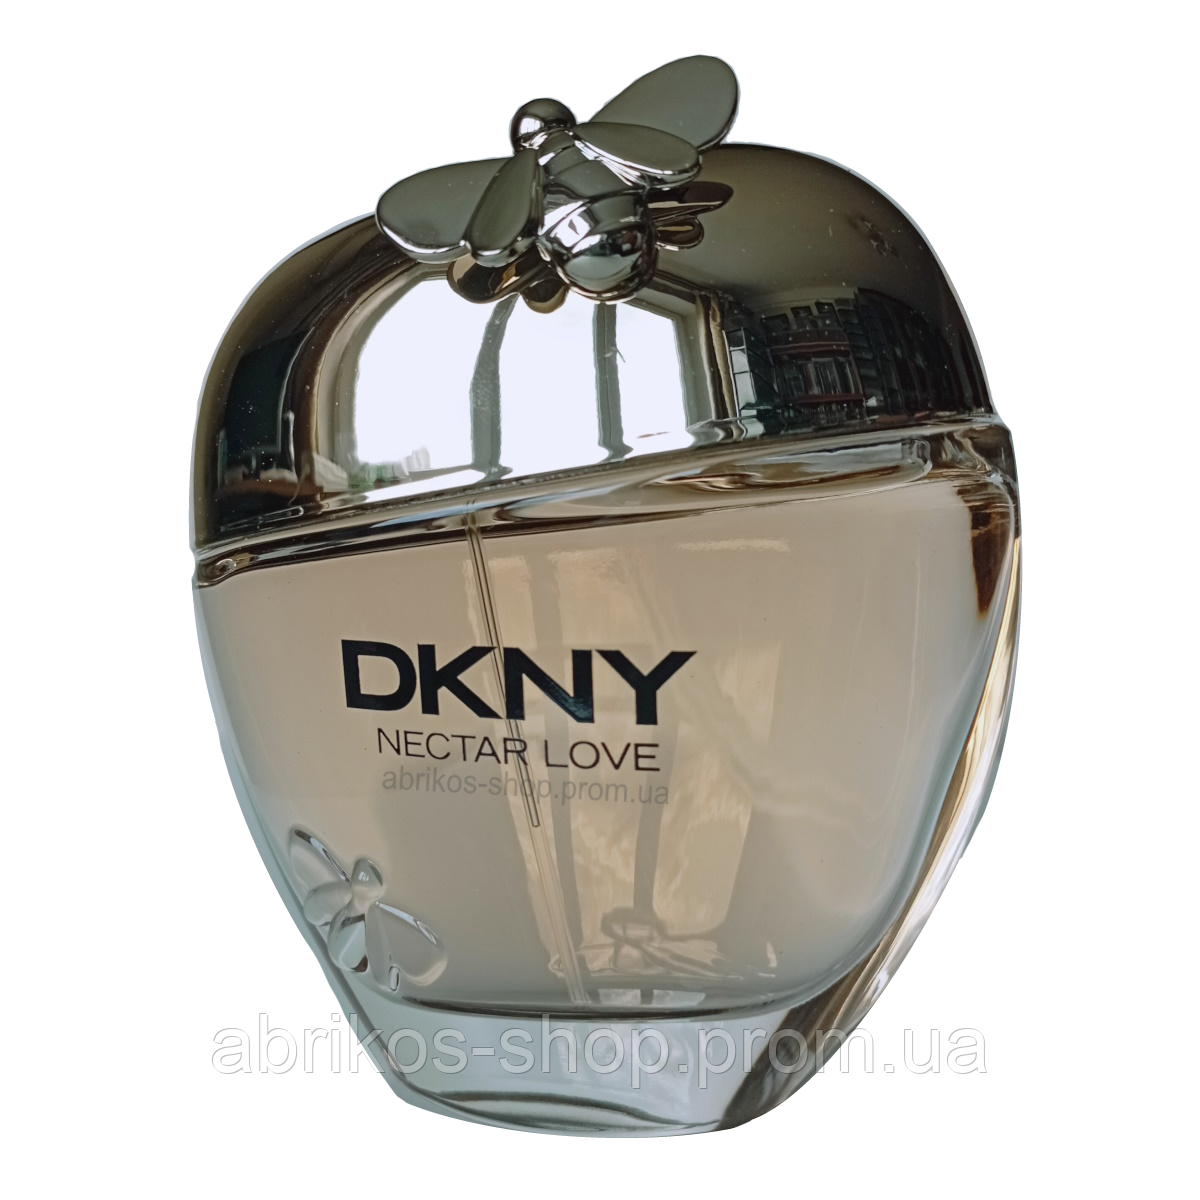 DKNY Nectar Love edp Донна Каран Нектар Кохання парфумована 100 мл. Оригінал Швейцарія